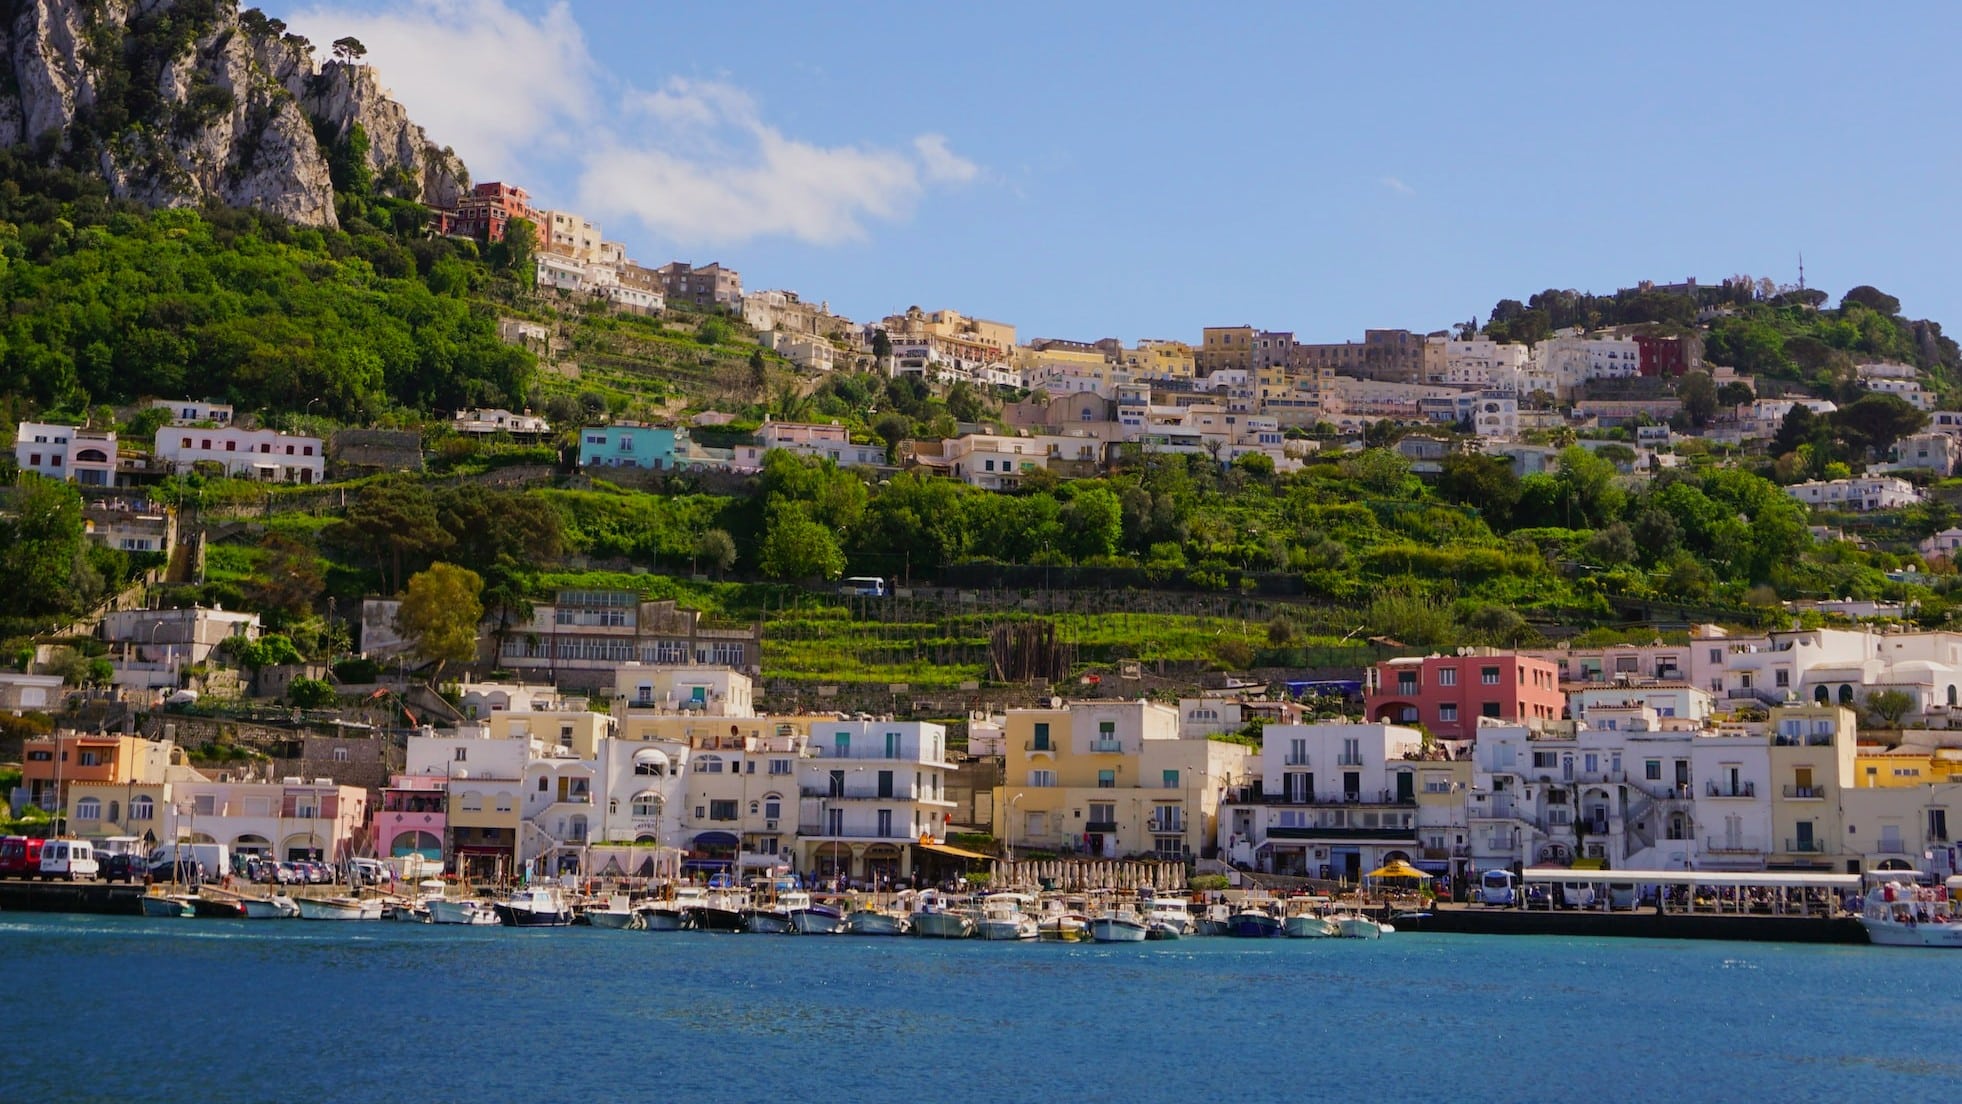 Marina Grande is the gateway to Capri